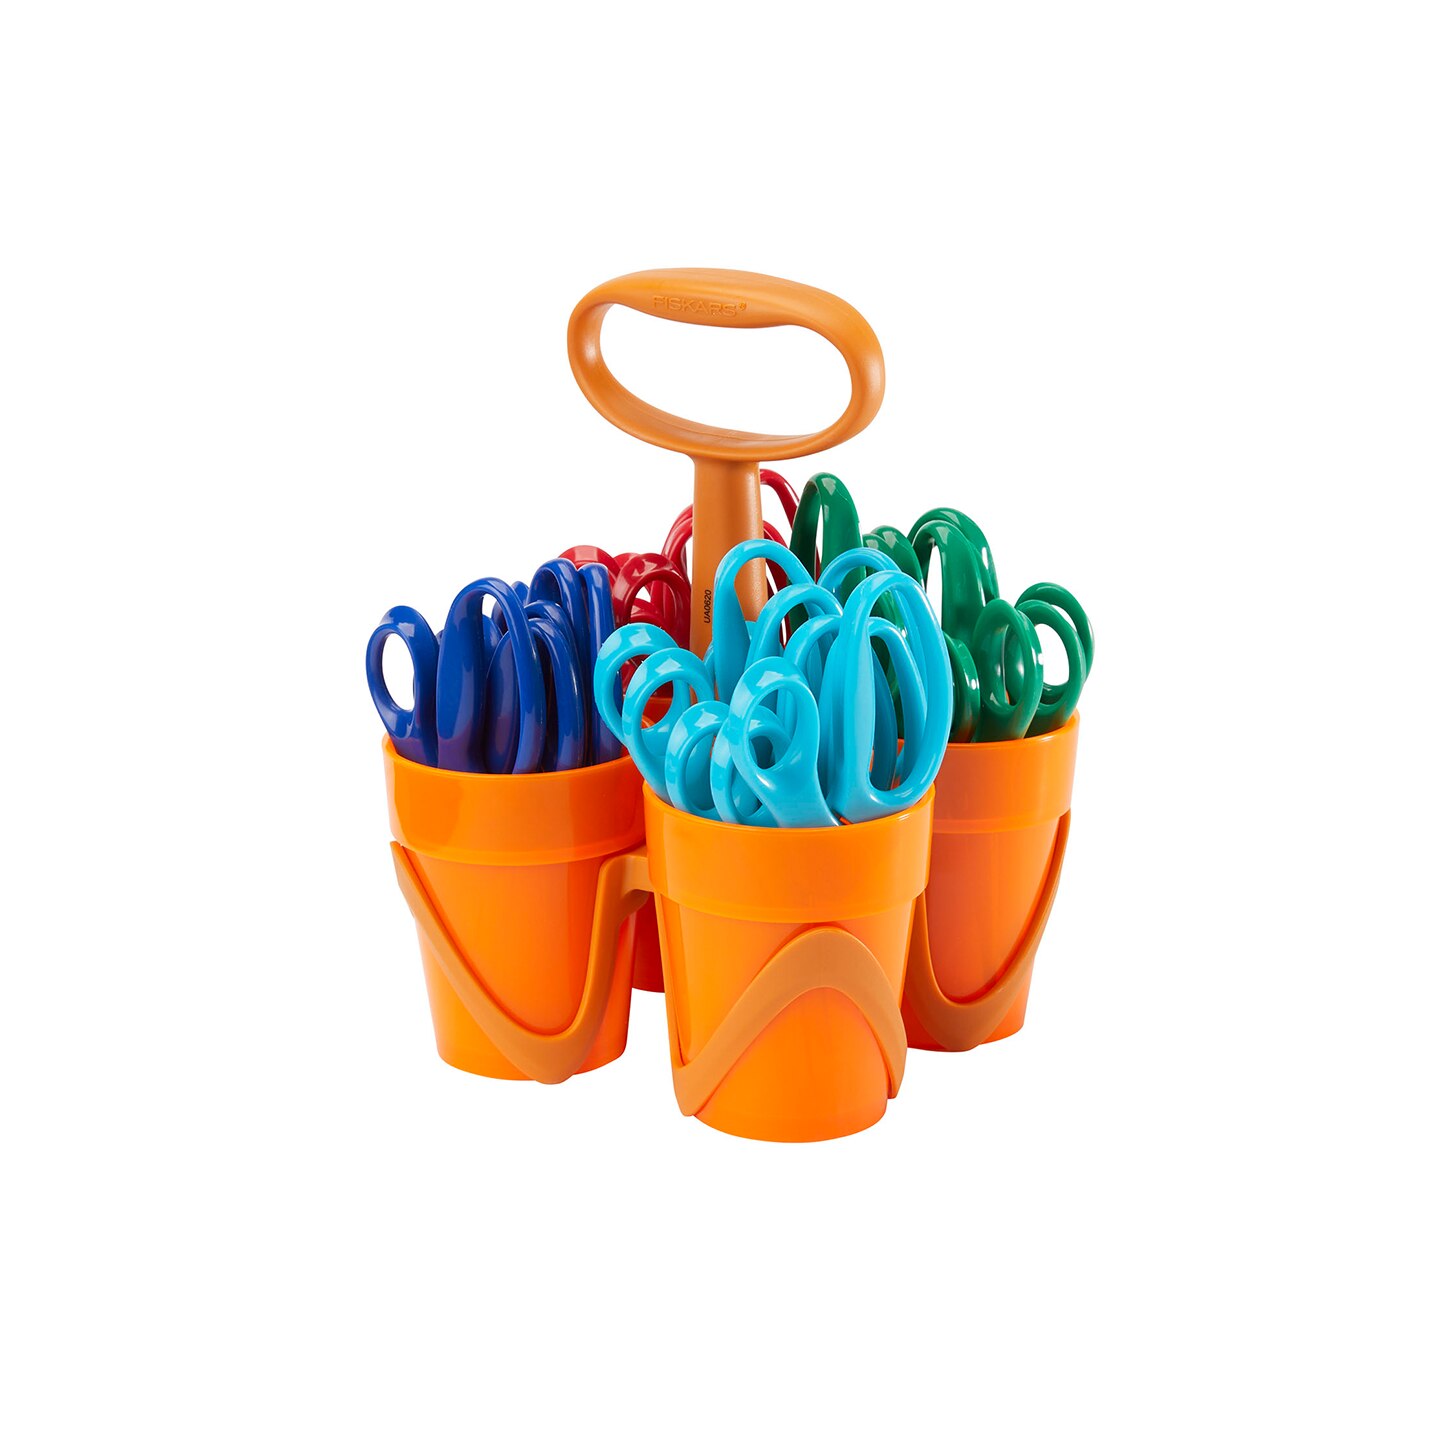 Fiskars Starter Safety Scissors, 3 Pack, Assorted Colors (Ages 2+)